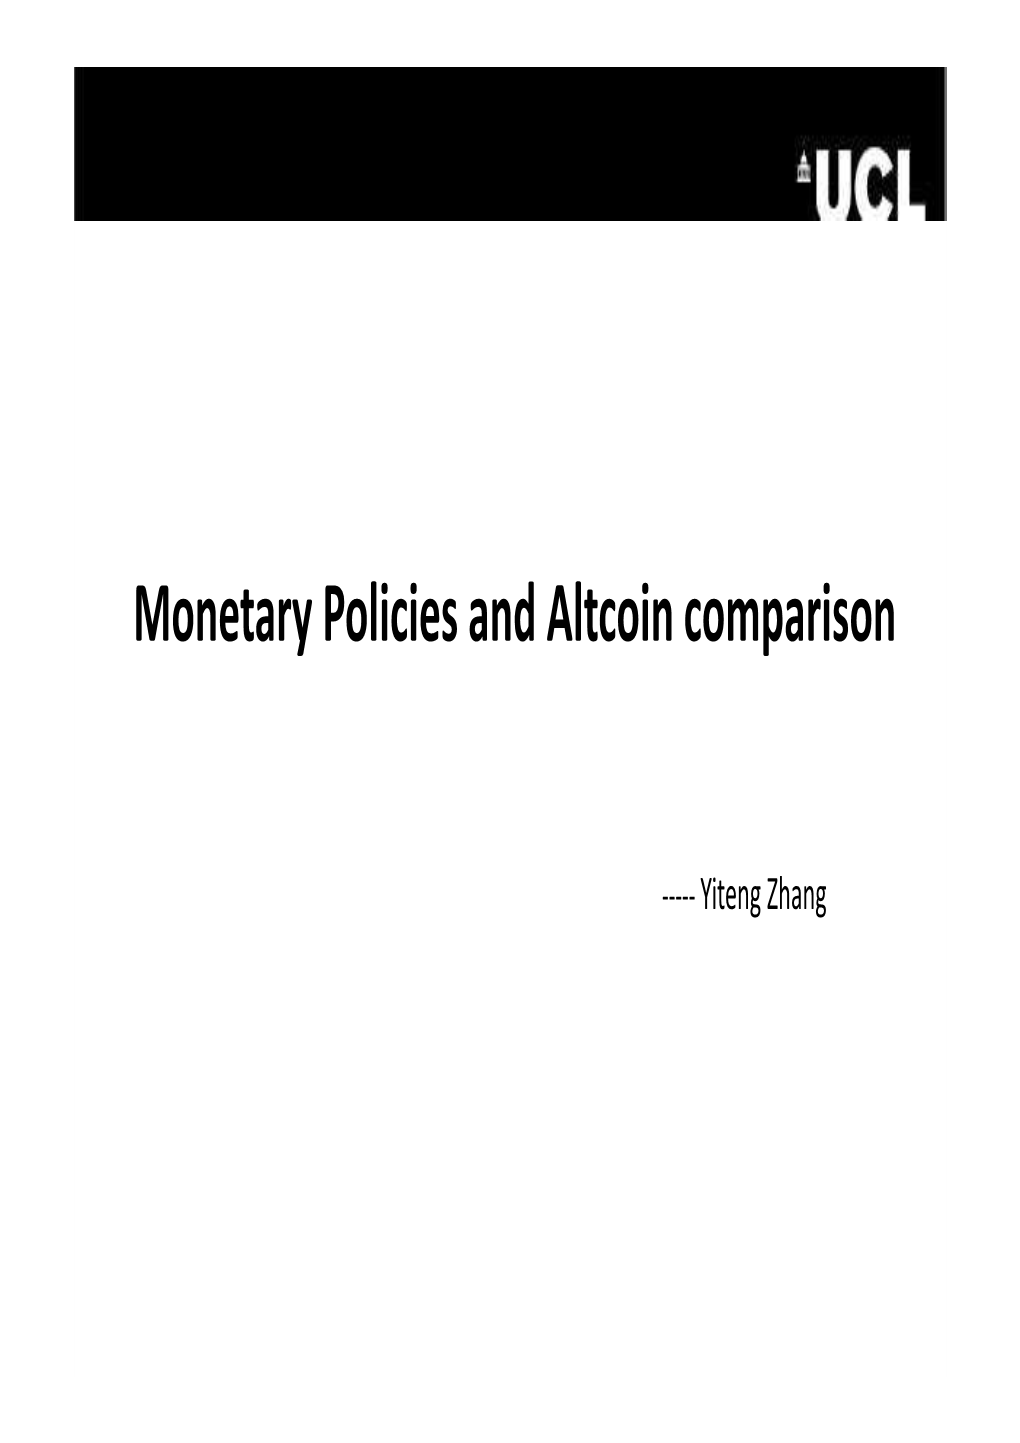 Monetary Policy Yiteng Zhang